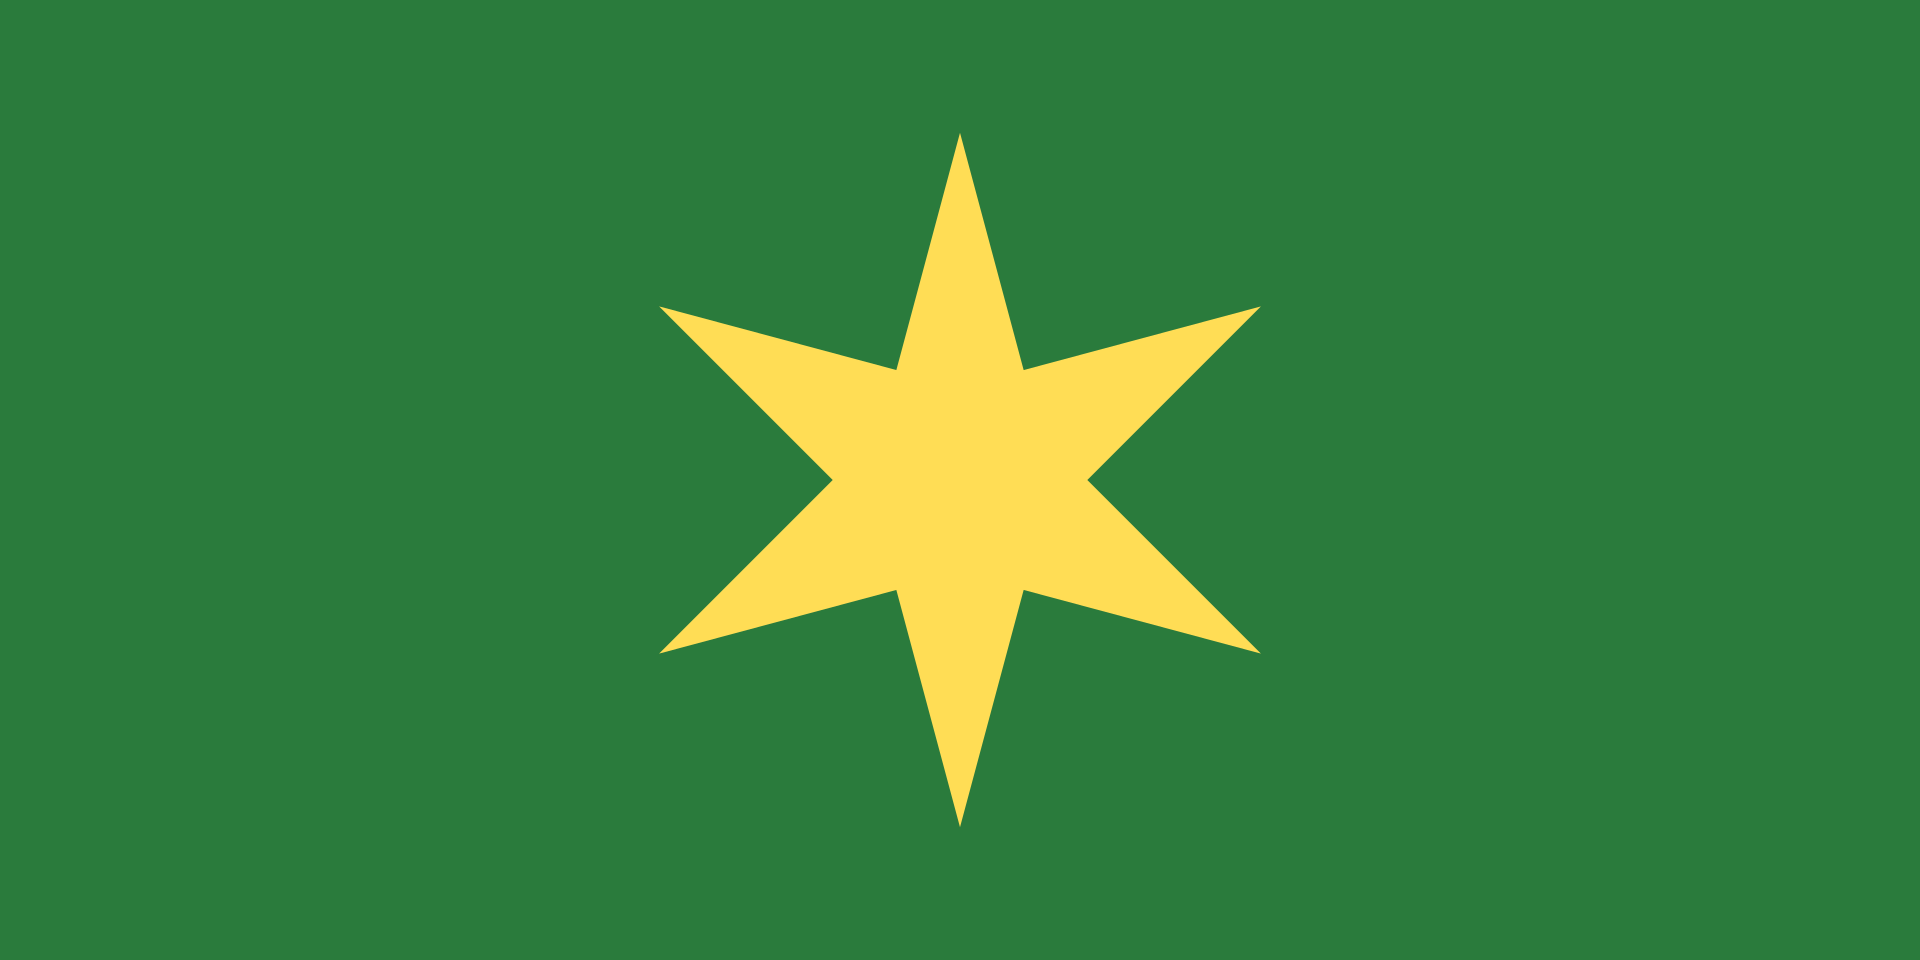 The governmental flag